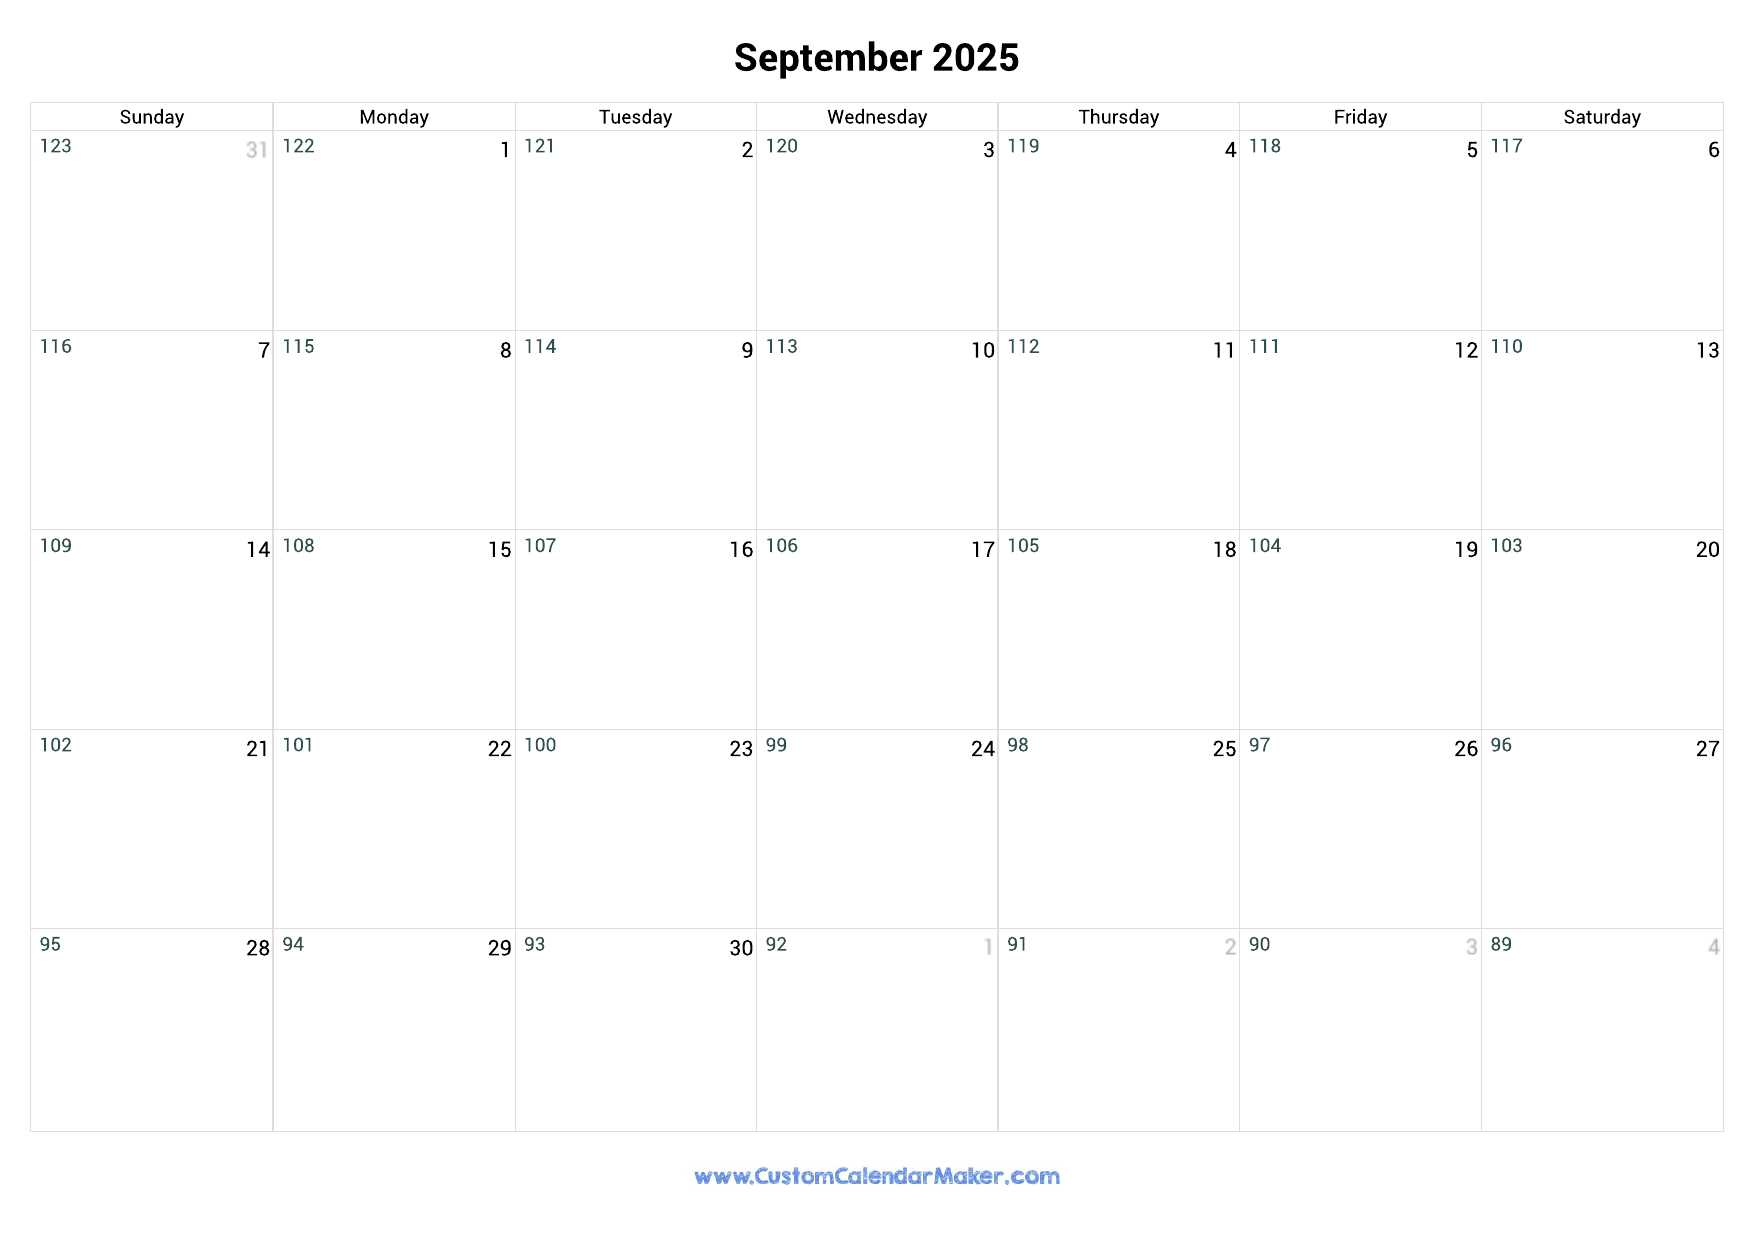 september-2025-remaining-days-calendar